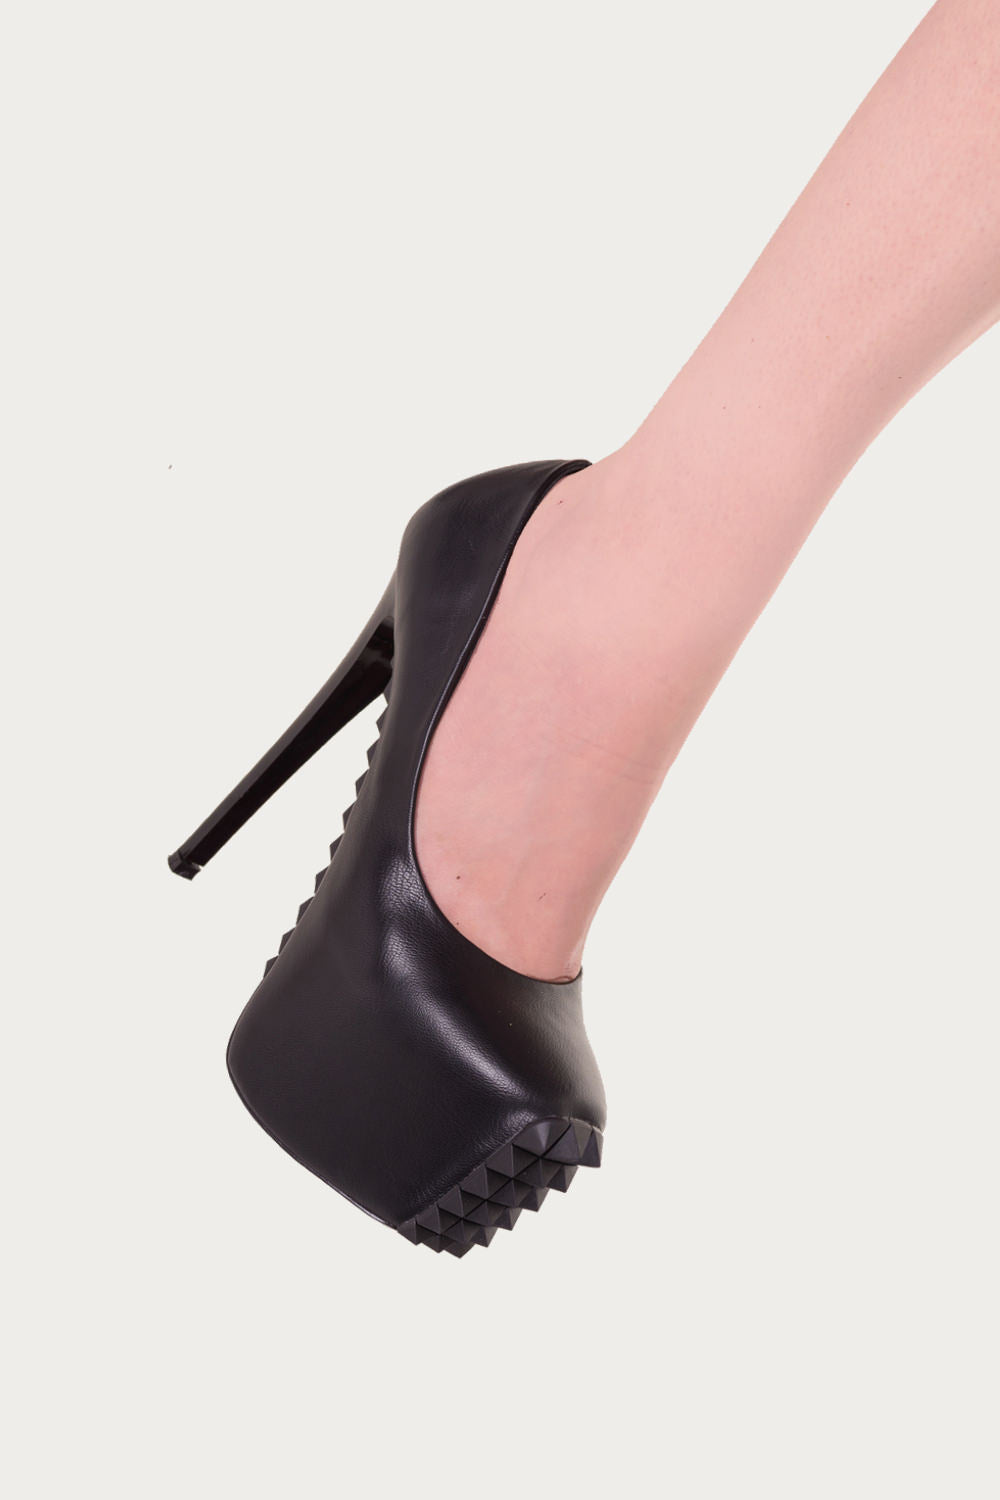 Banned Alternative Isley Black Stiletto High Heels